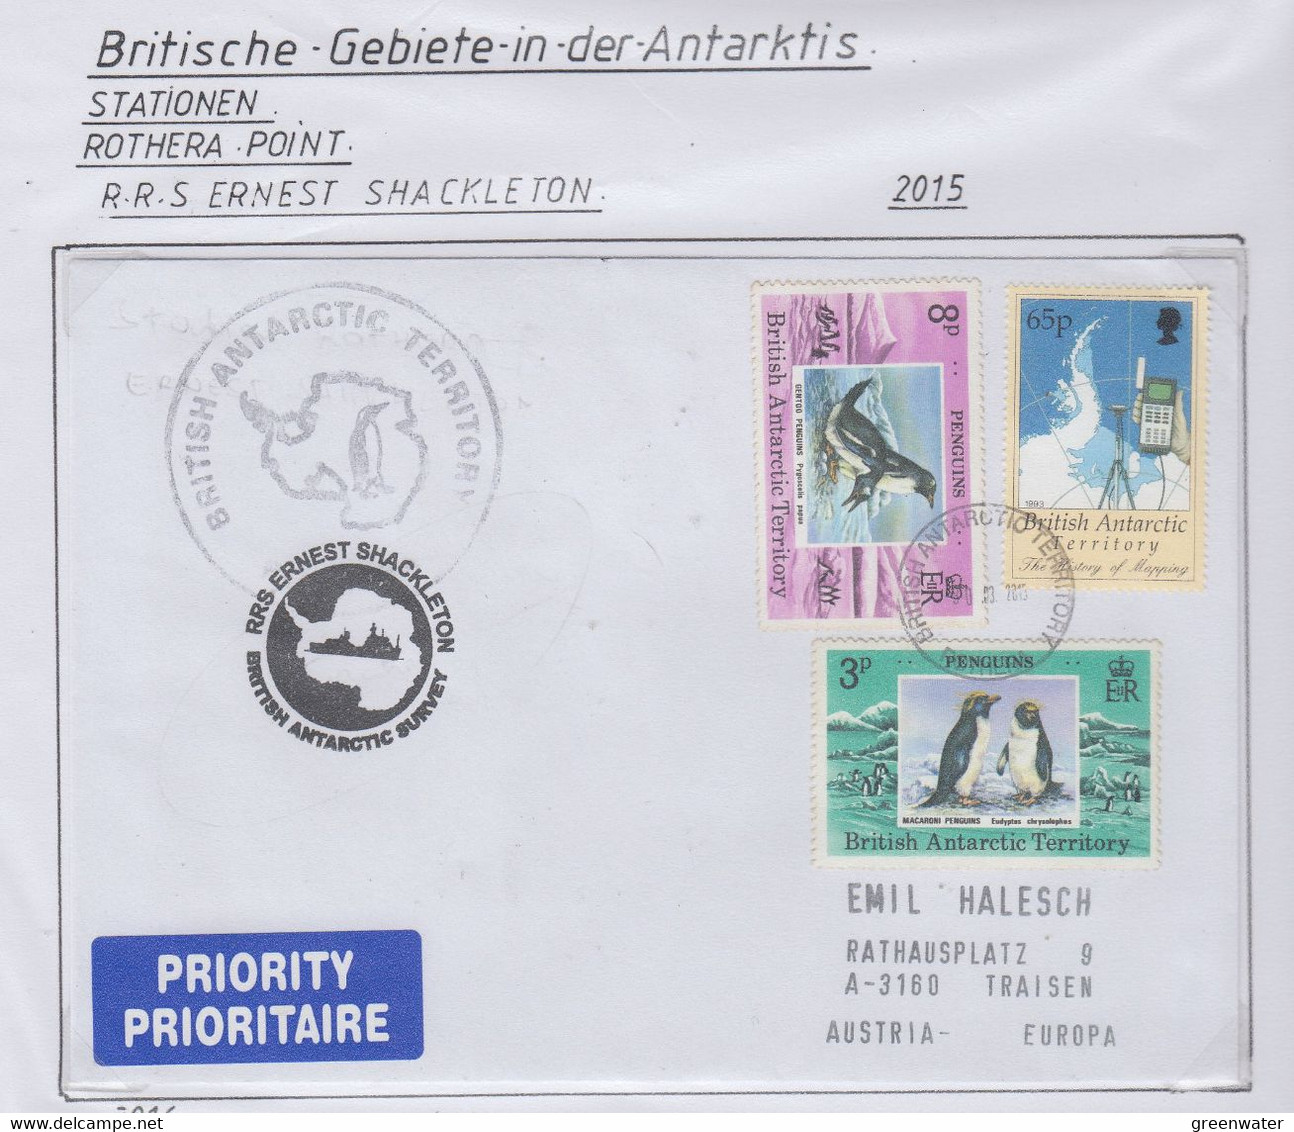 British Antarctic Territory (BAT)  2015 Cover Ship Visit RRS Ernest Shackleton Ca Rothera 12.03.2015 (RH185) - Covers & Documents